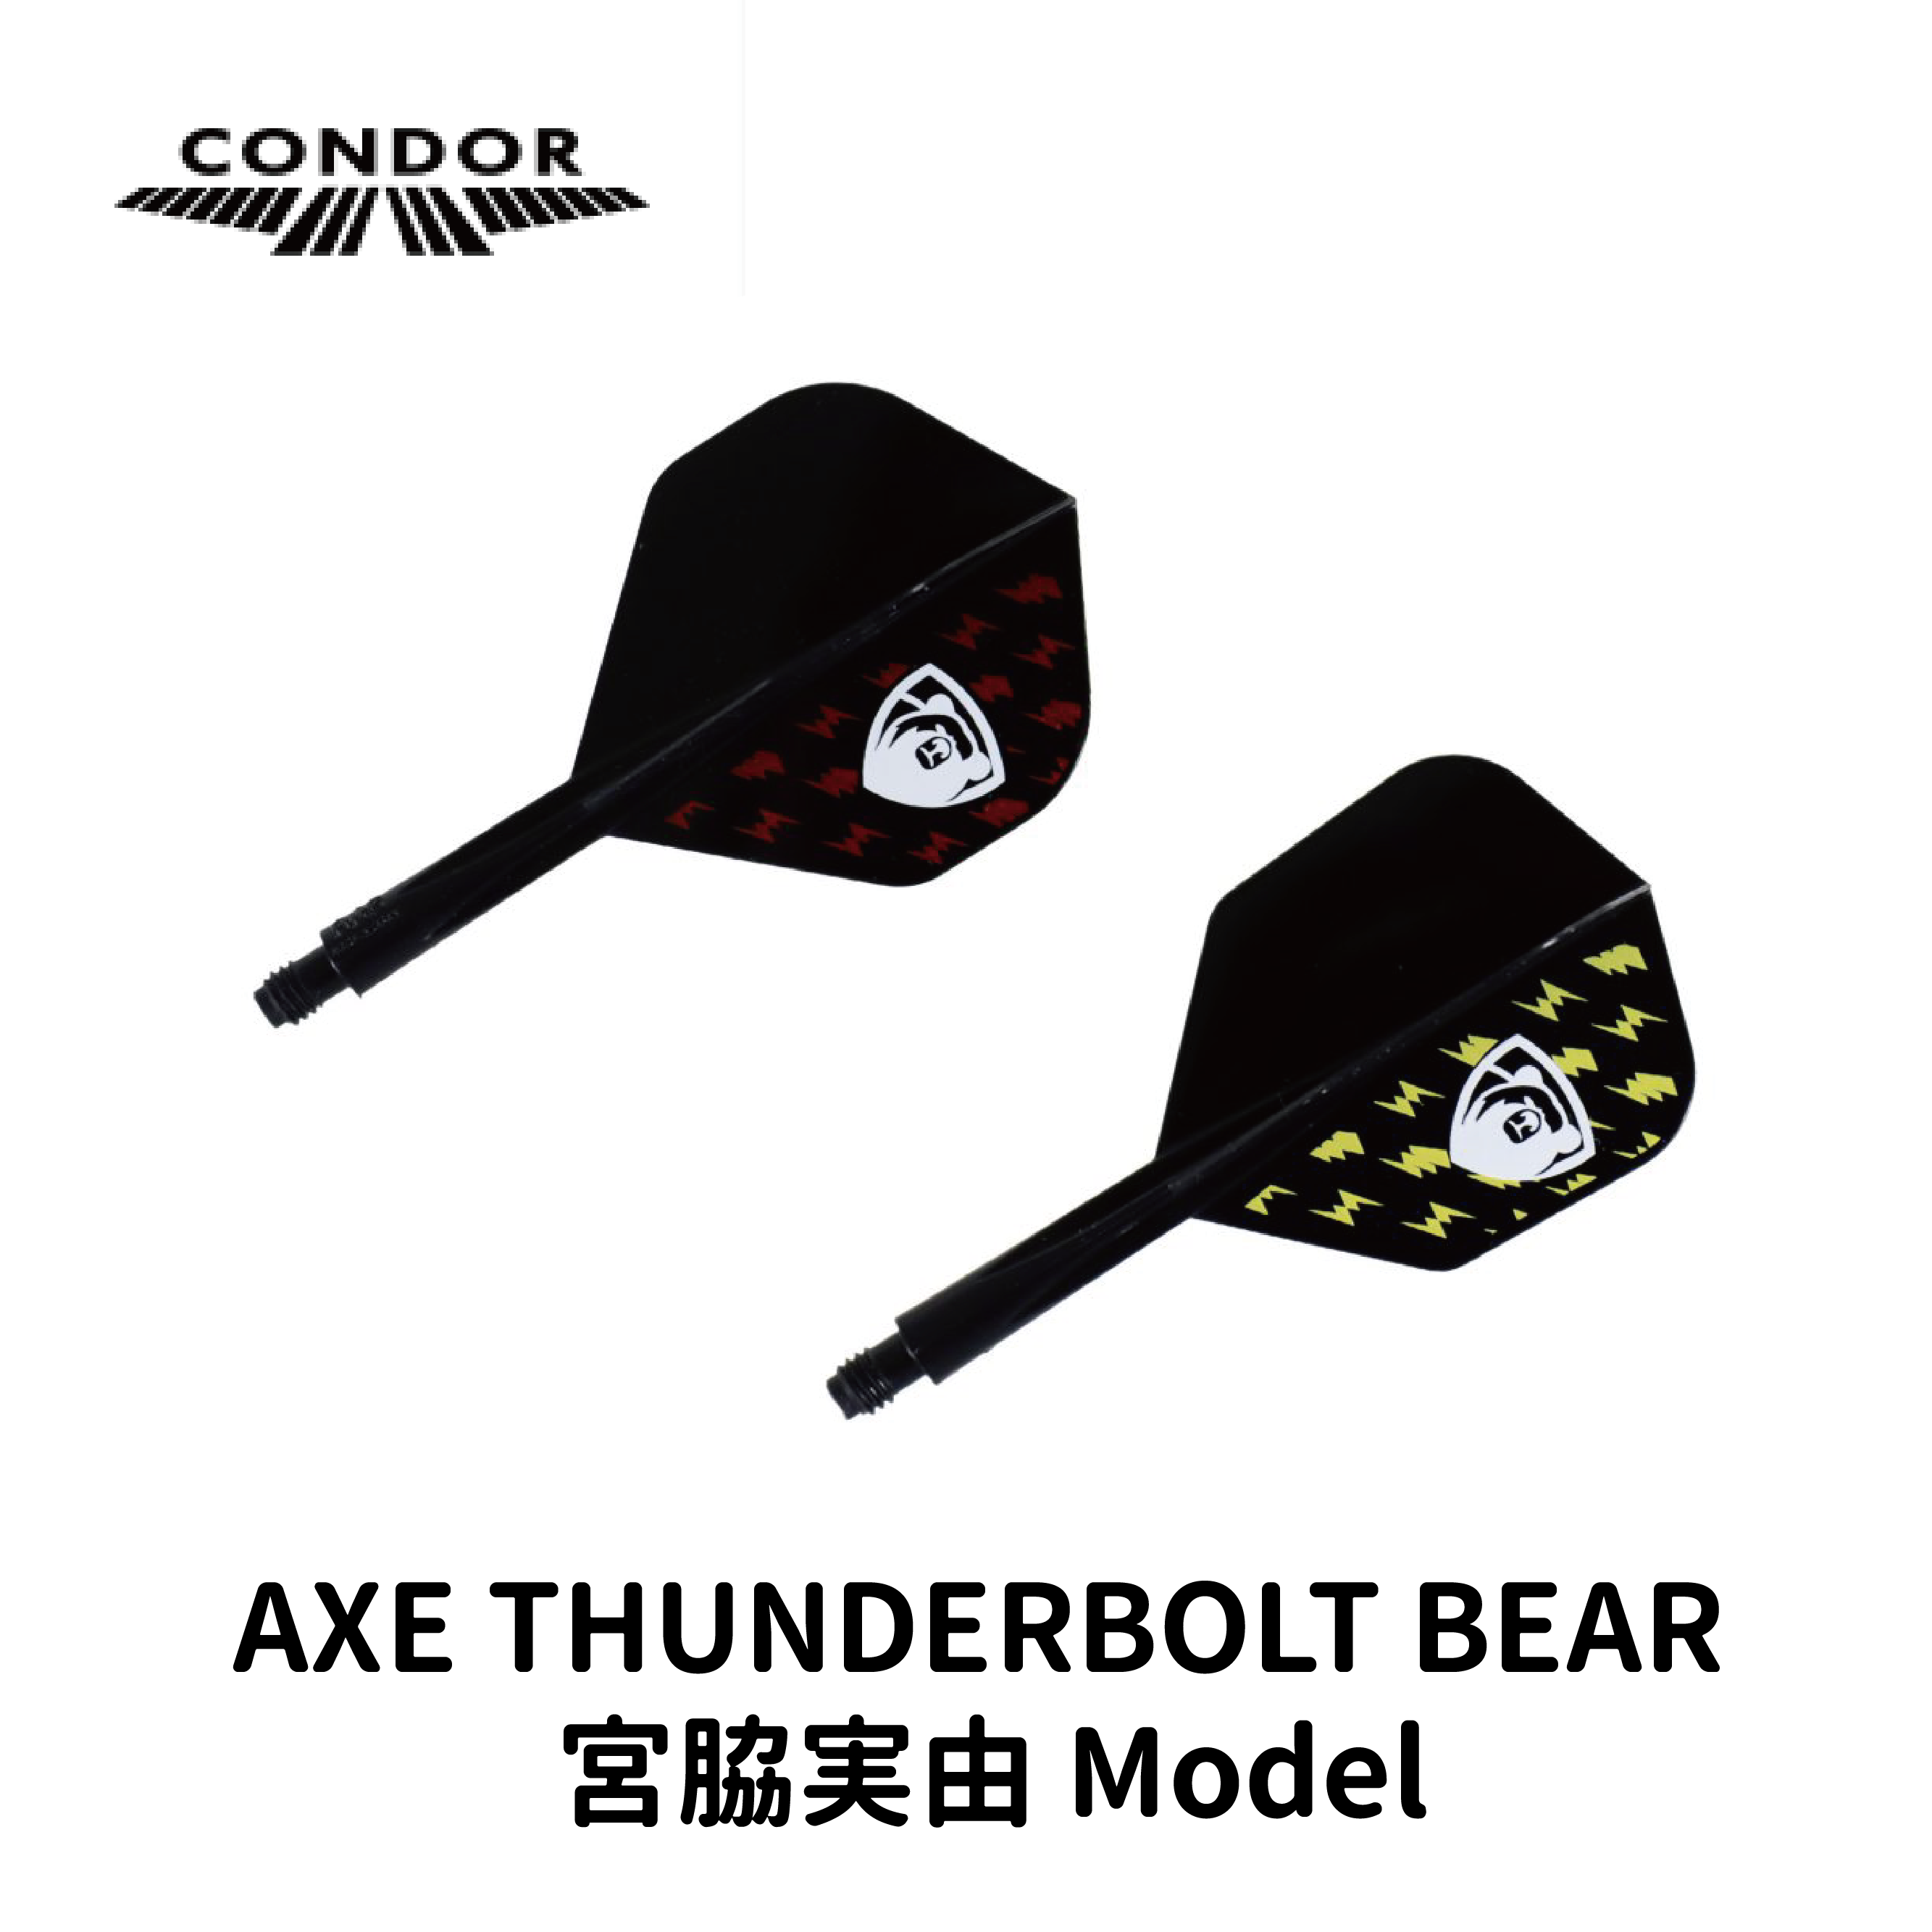 【CONDOR】AXE THUNDERBOLT BEAR 宮脇実由 Model Standard Small Black